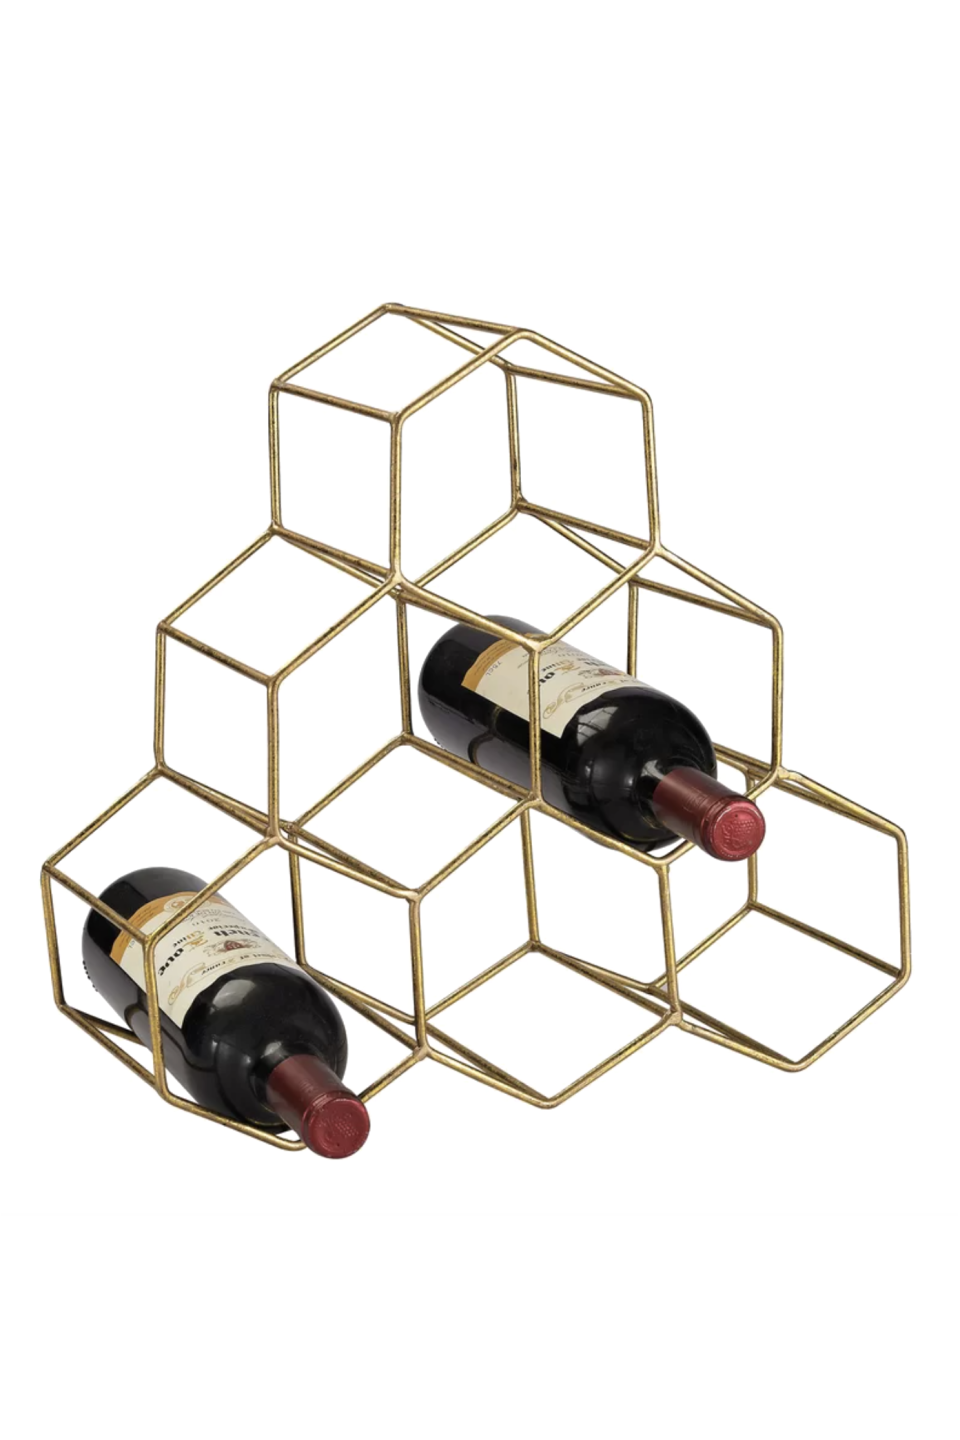 3) 6 Bottle Tabletop Wine Bottle Rack